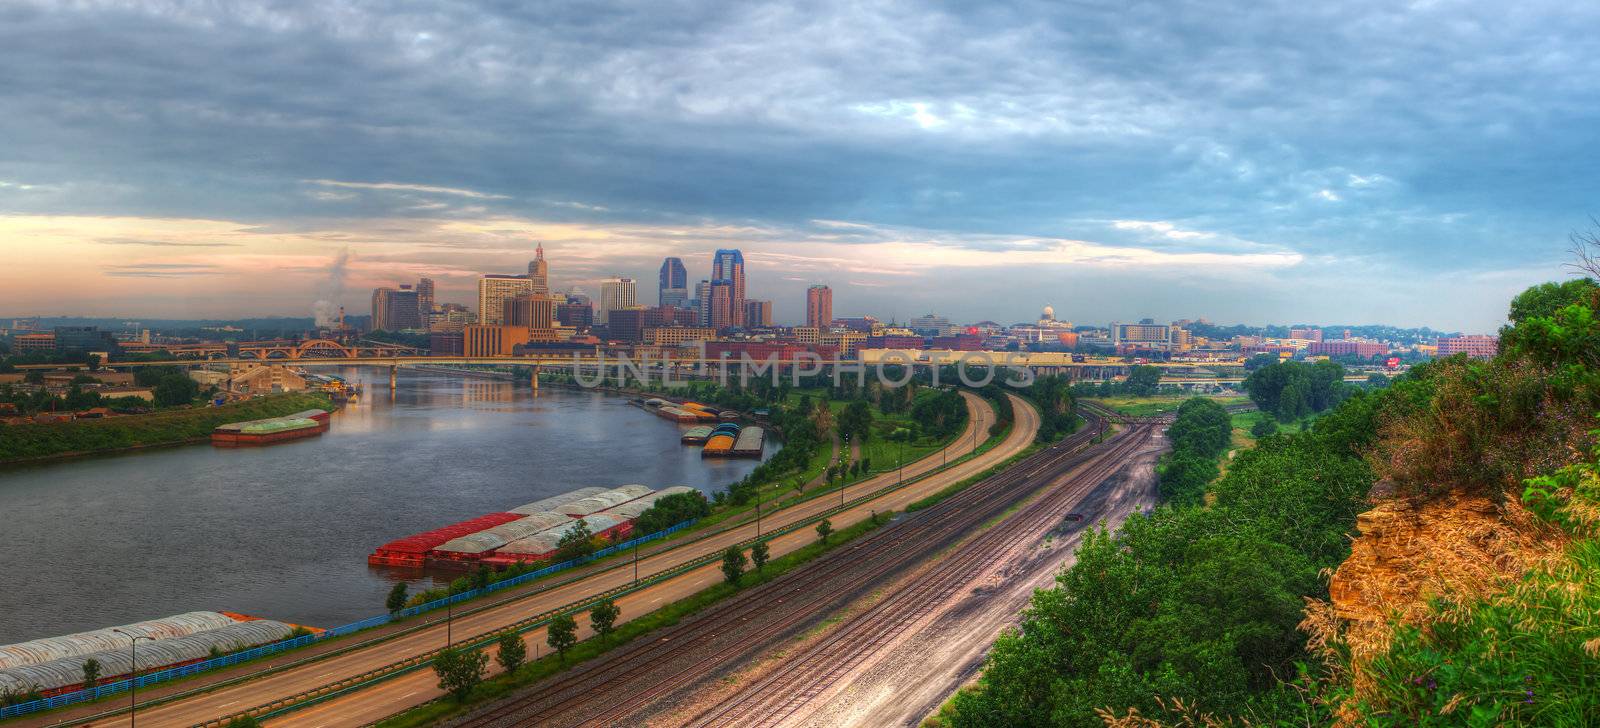 Cityscape panorama of St. Paul Minnesota by Coffee999